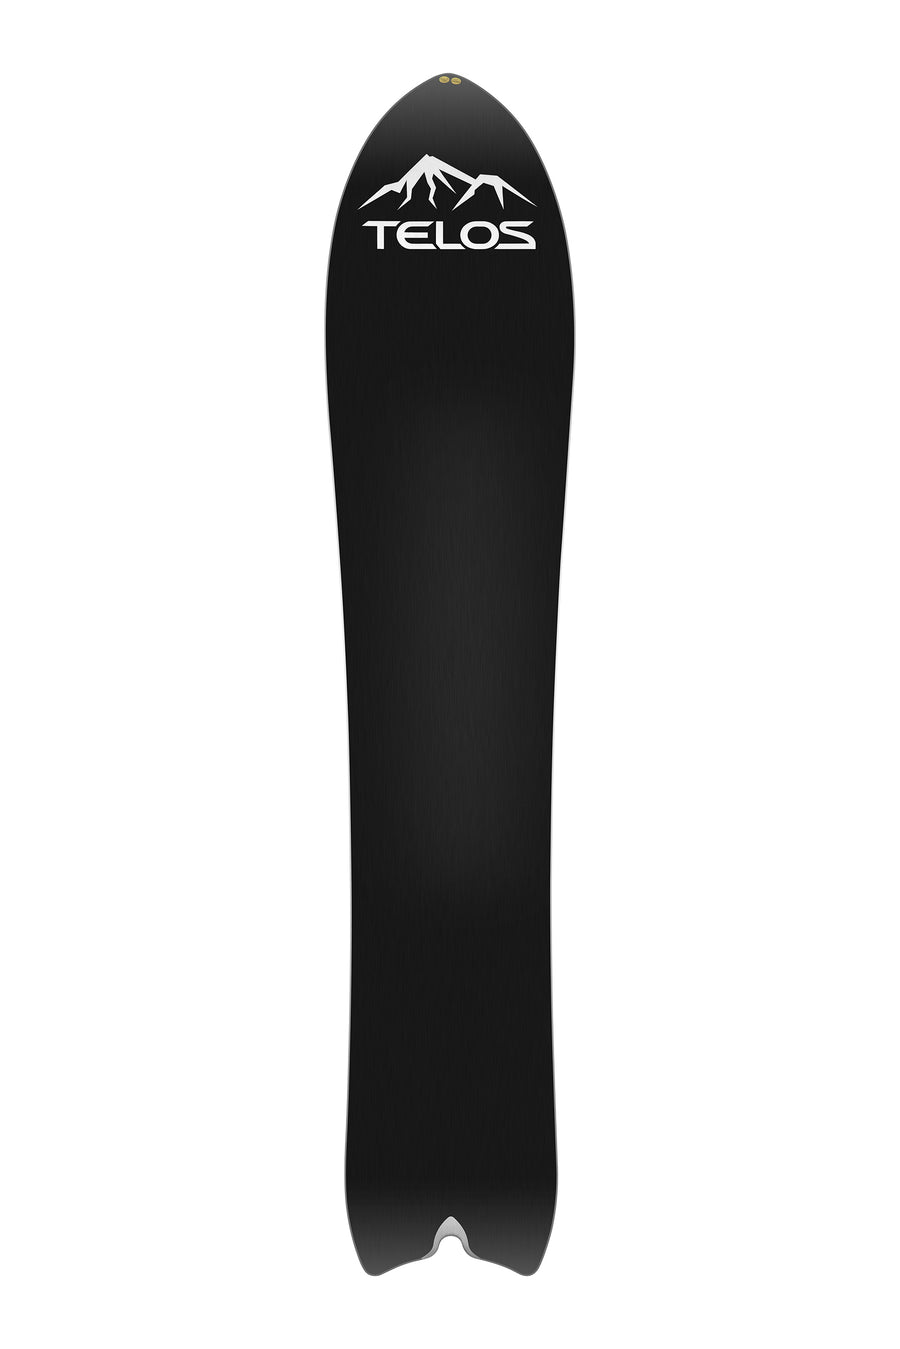 Telos Snowboards Caldera Surfer 22/23 - [ka(:)rısma] concept